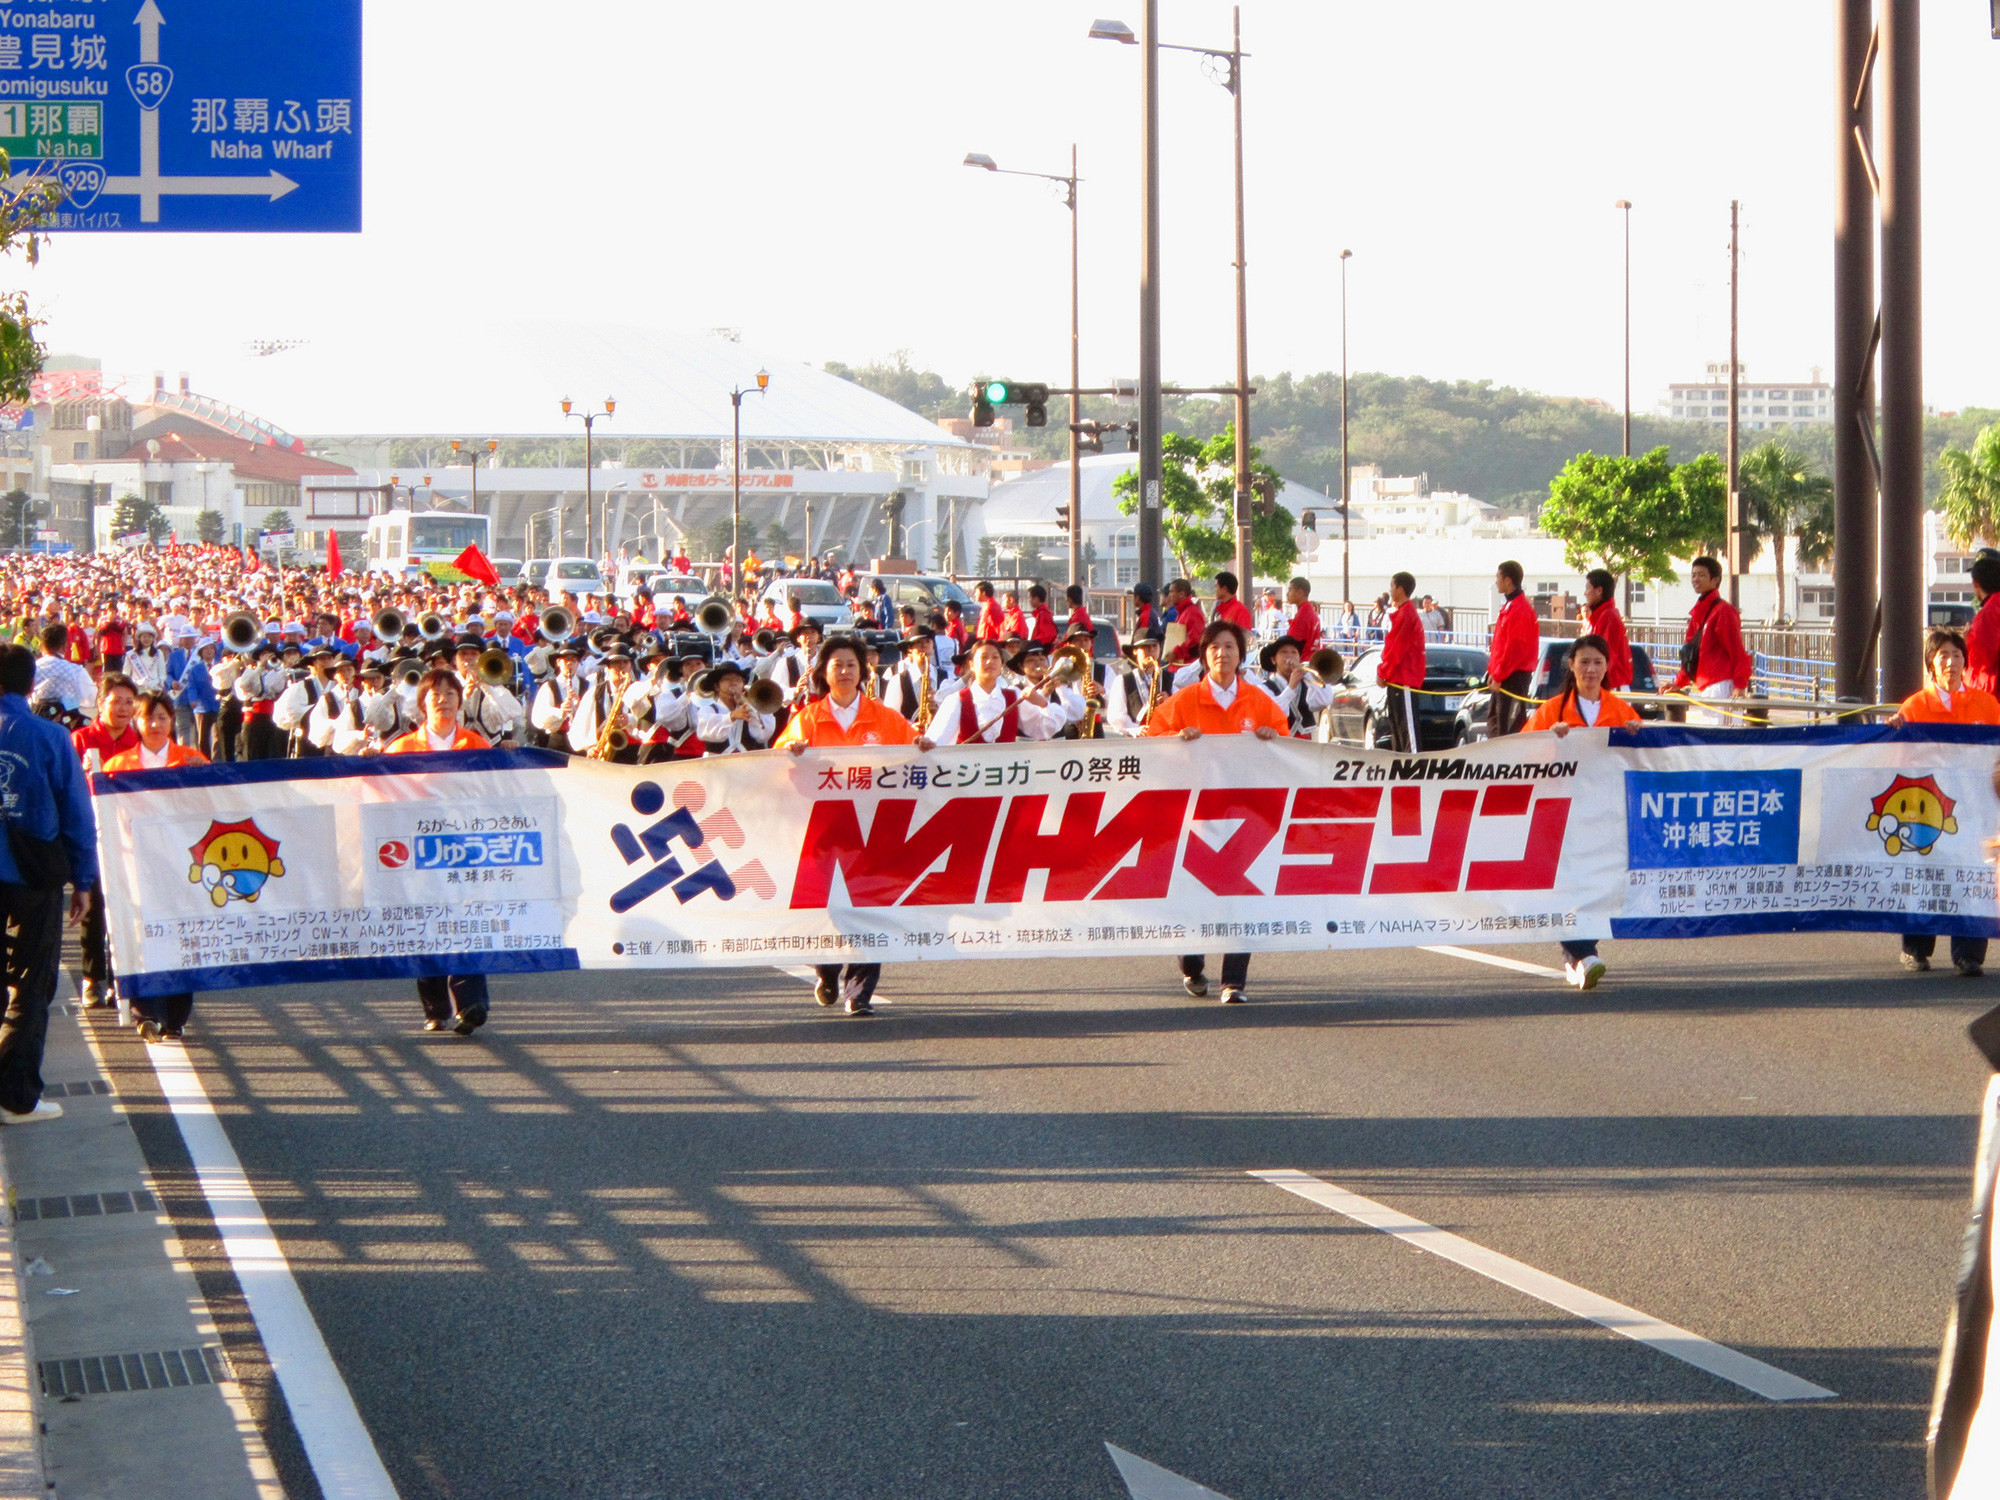 Naha Marathon Will Not Take Place This Year